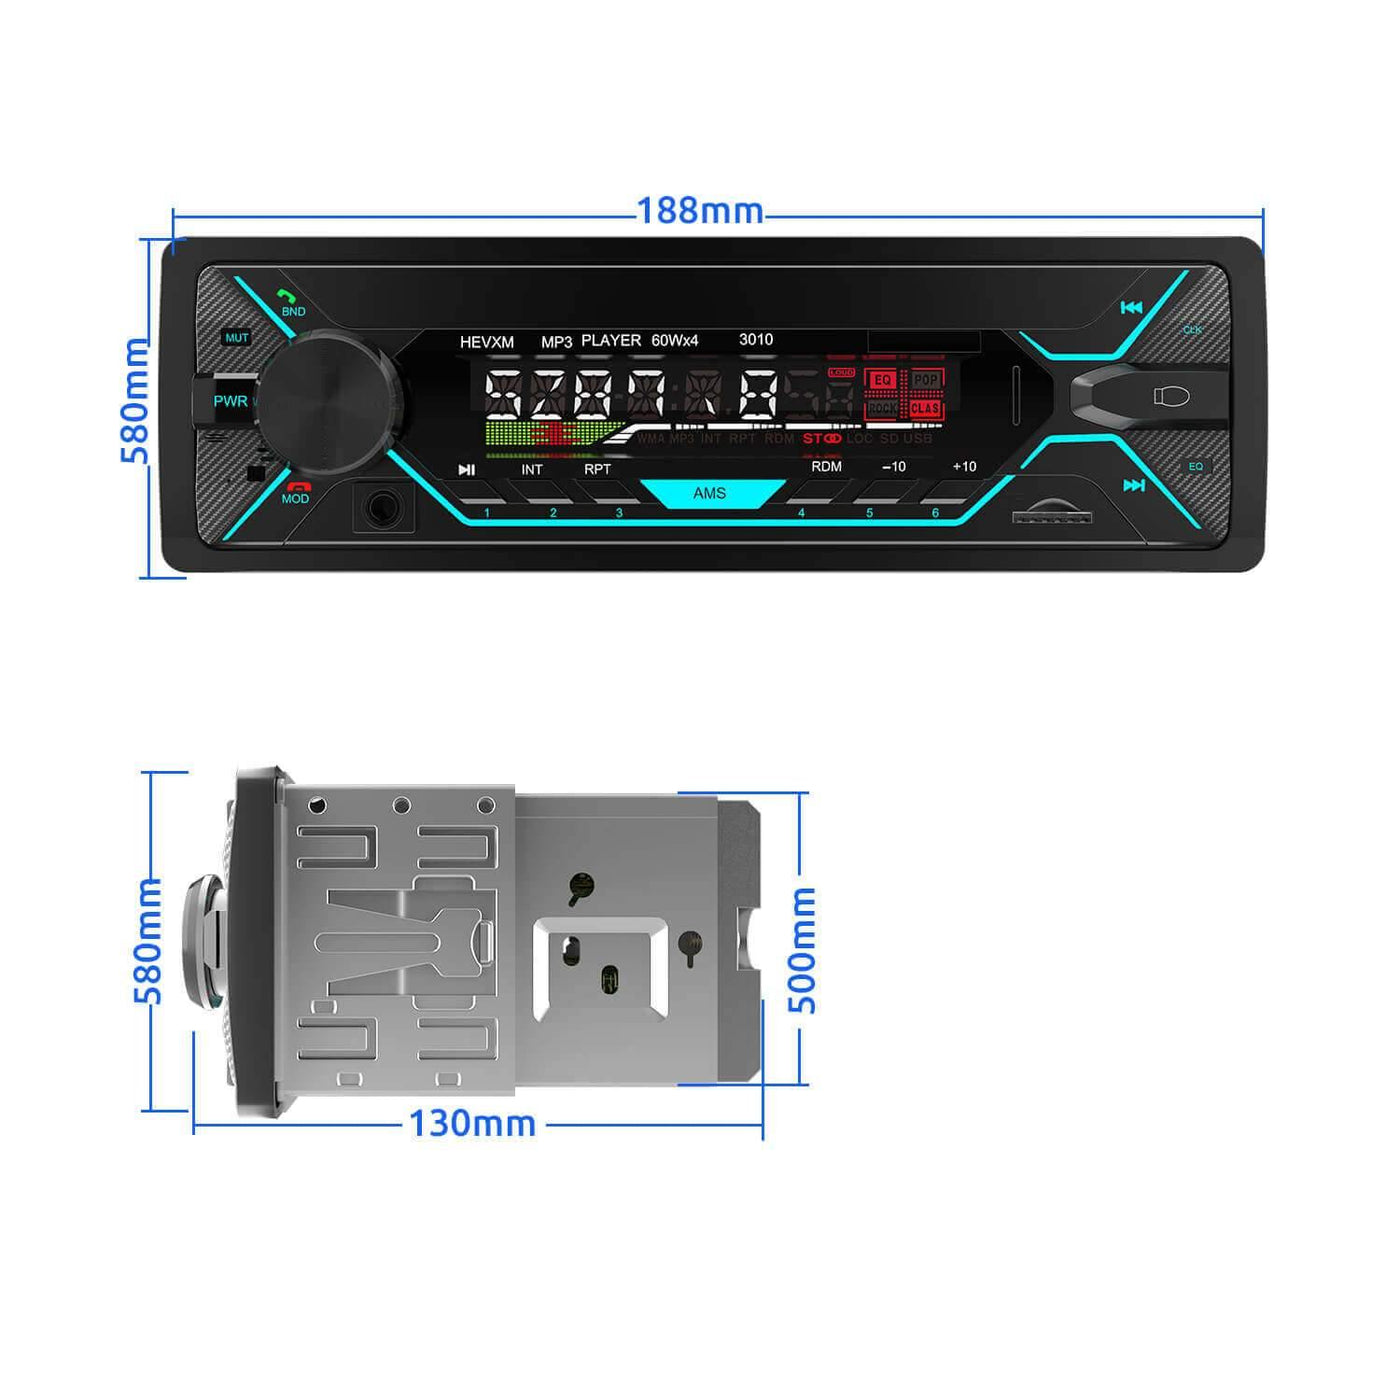 ESGOO AR1001  Autoradio con Android 10 GPS NAVI FM Radio Multimedia Auto  Player – ESSGOO